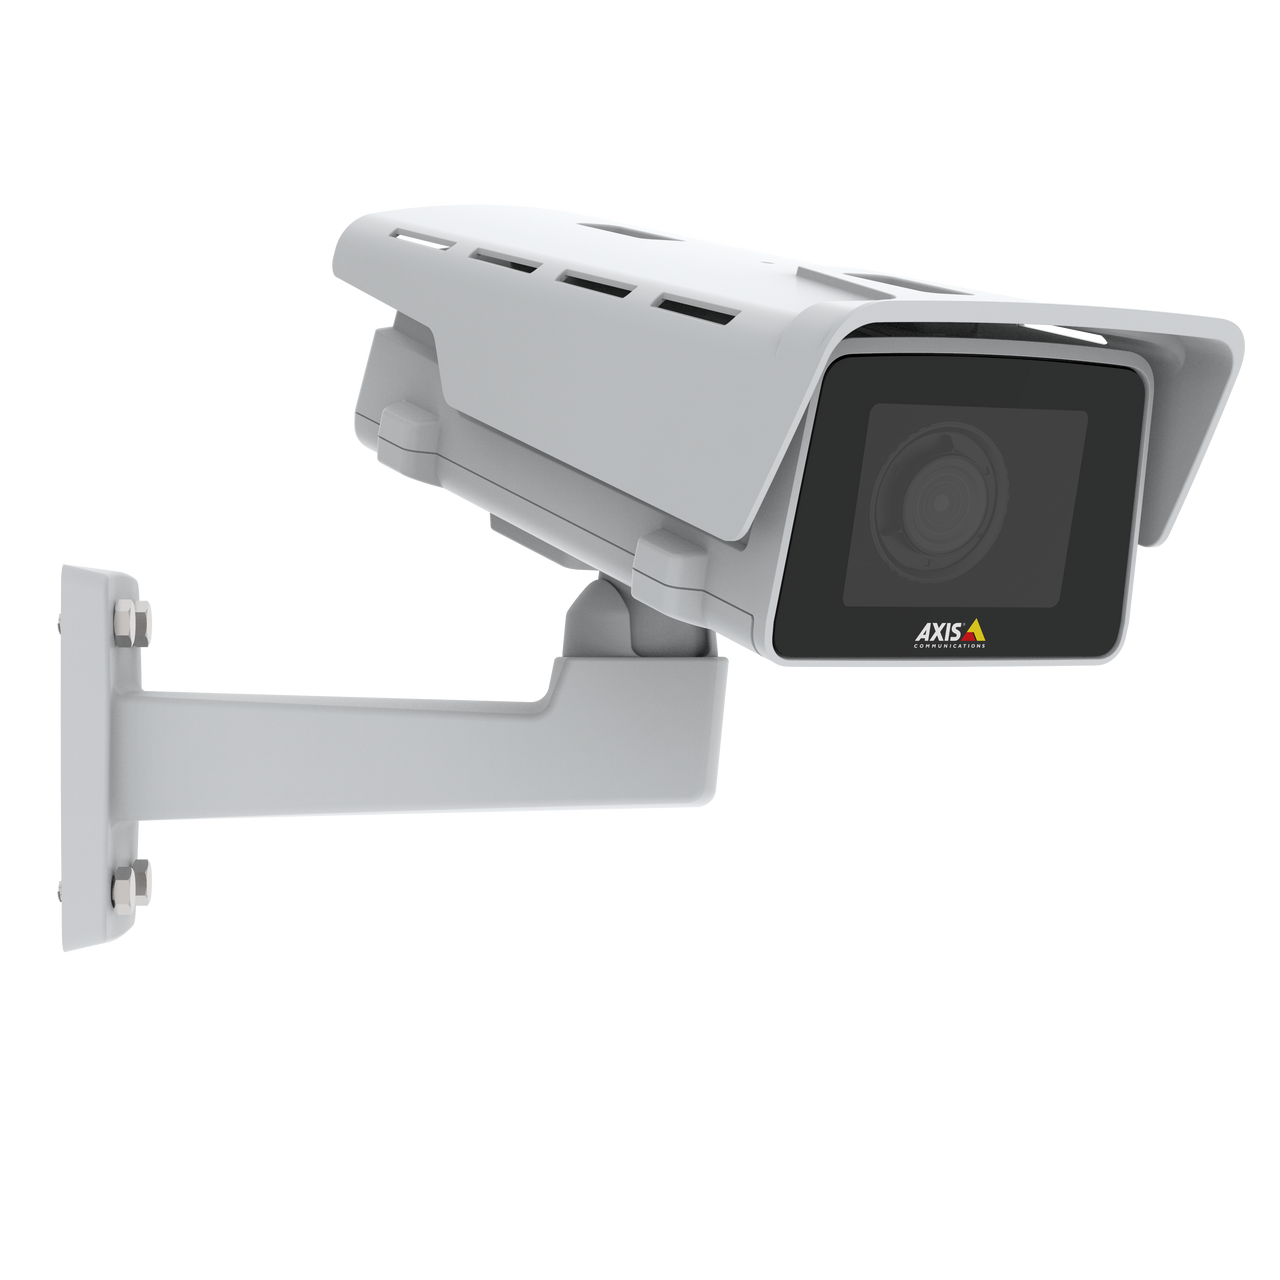 AXIS M1137-E MK II Box Camera Outdoor-ready 5 MP affordable surveillance